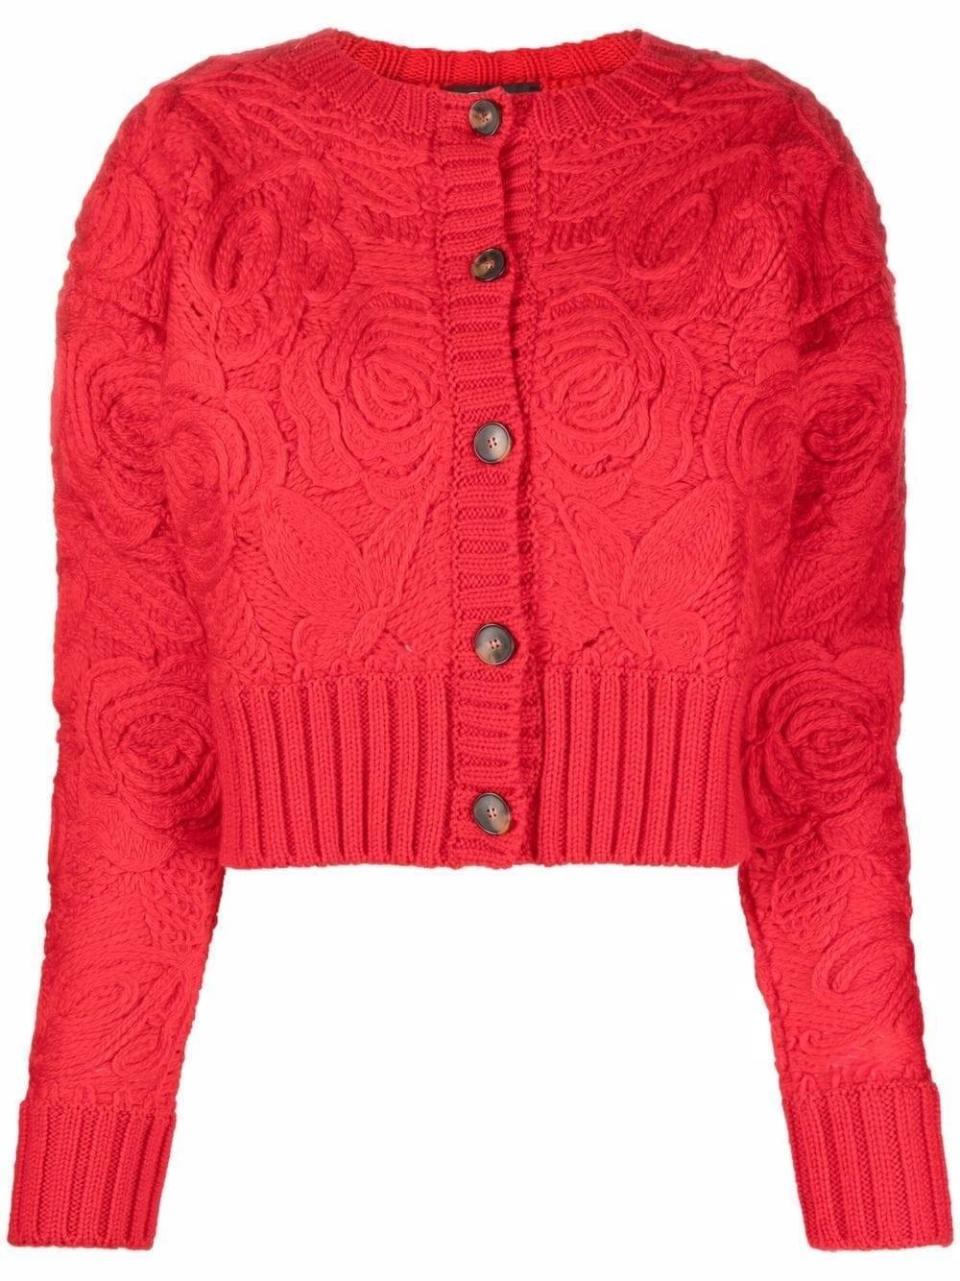 BLUMARINE紅色立體玫瑰針織外套。NT$70,800（藍鐘提供）